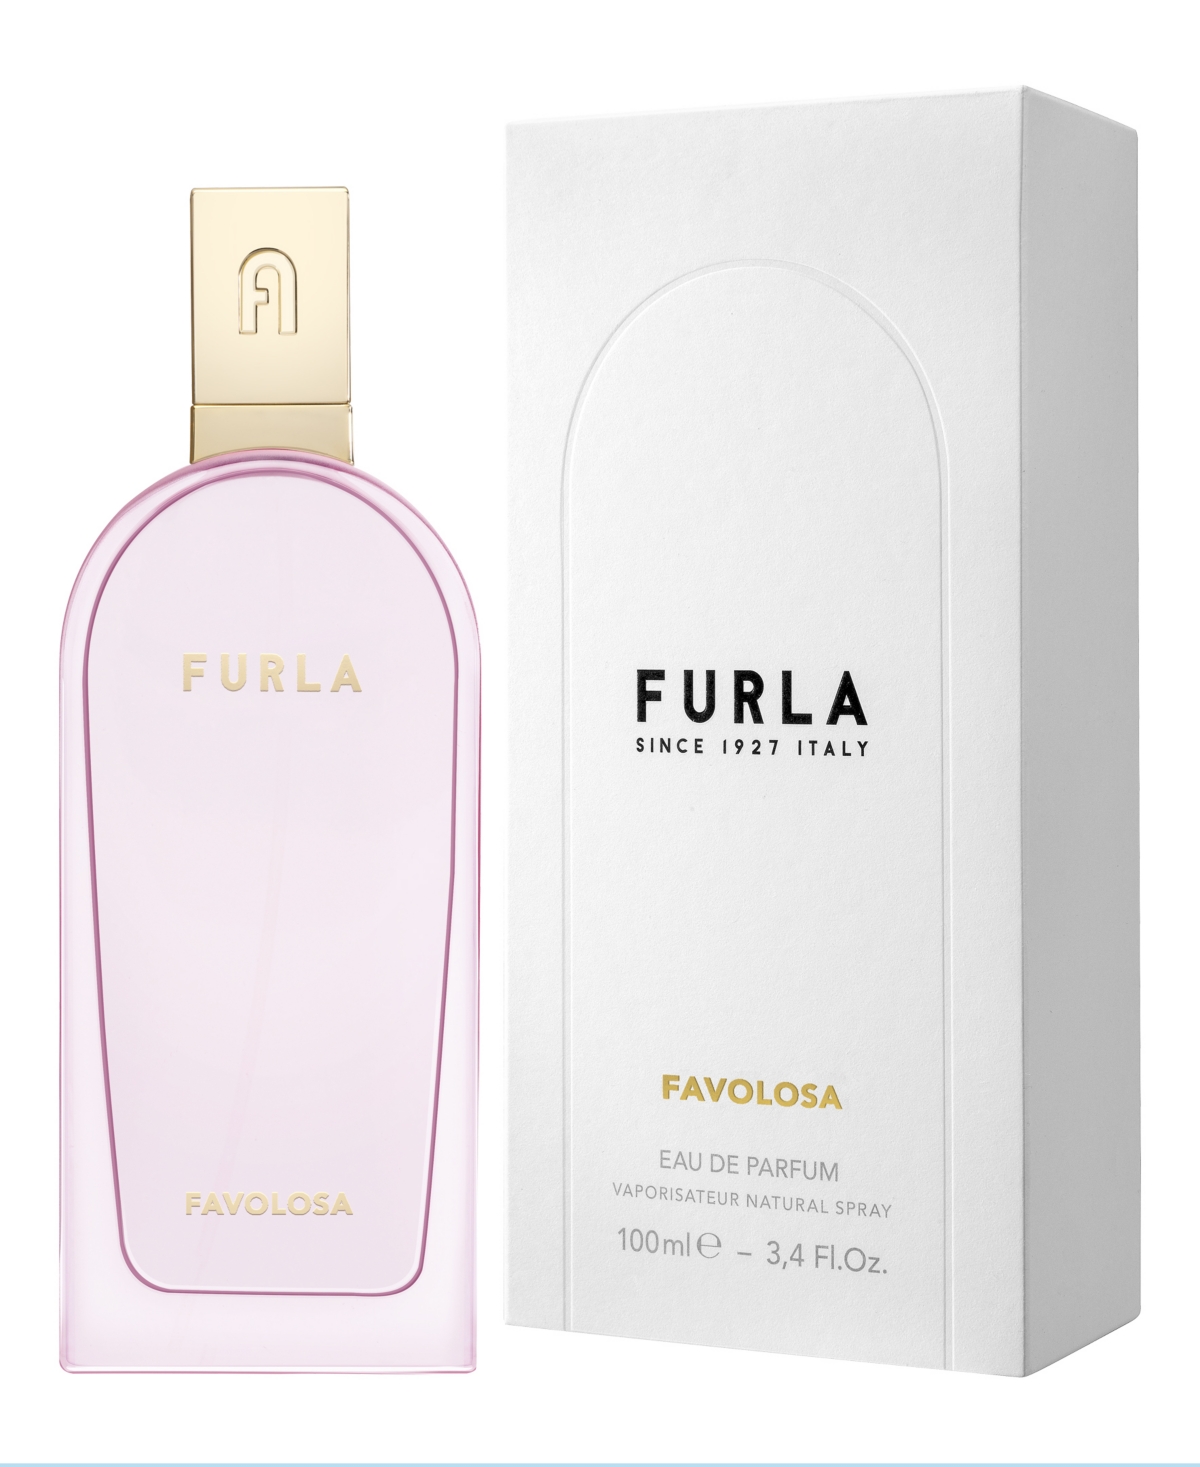 Furla Women's Favolosa Eau De Parfum Spray, 3.4 Fl oz